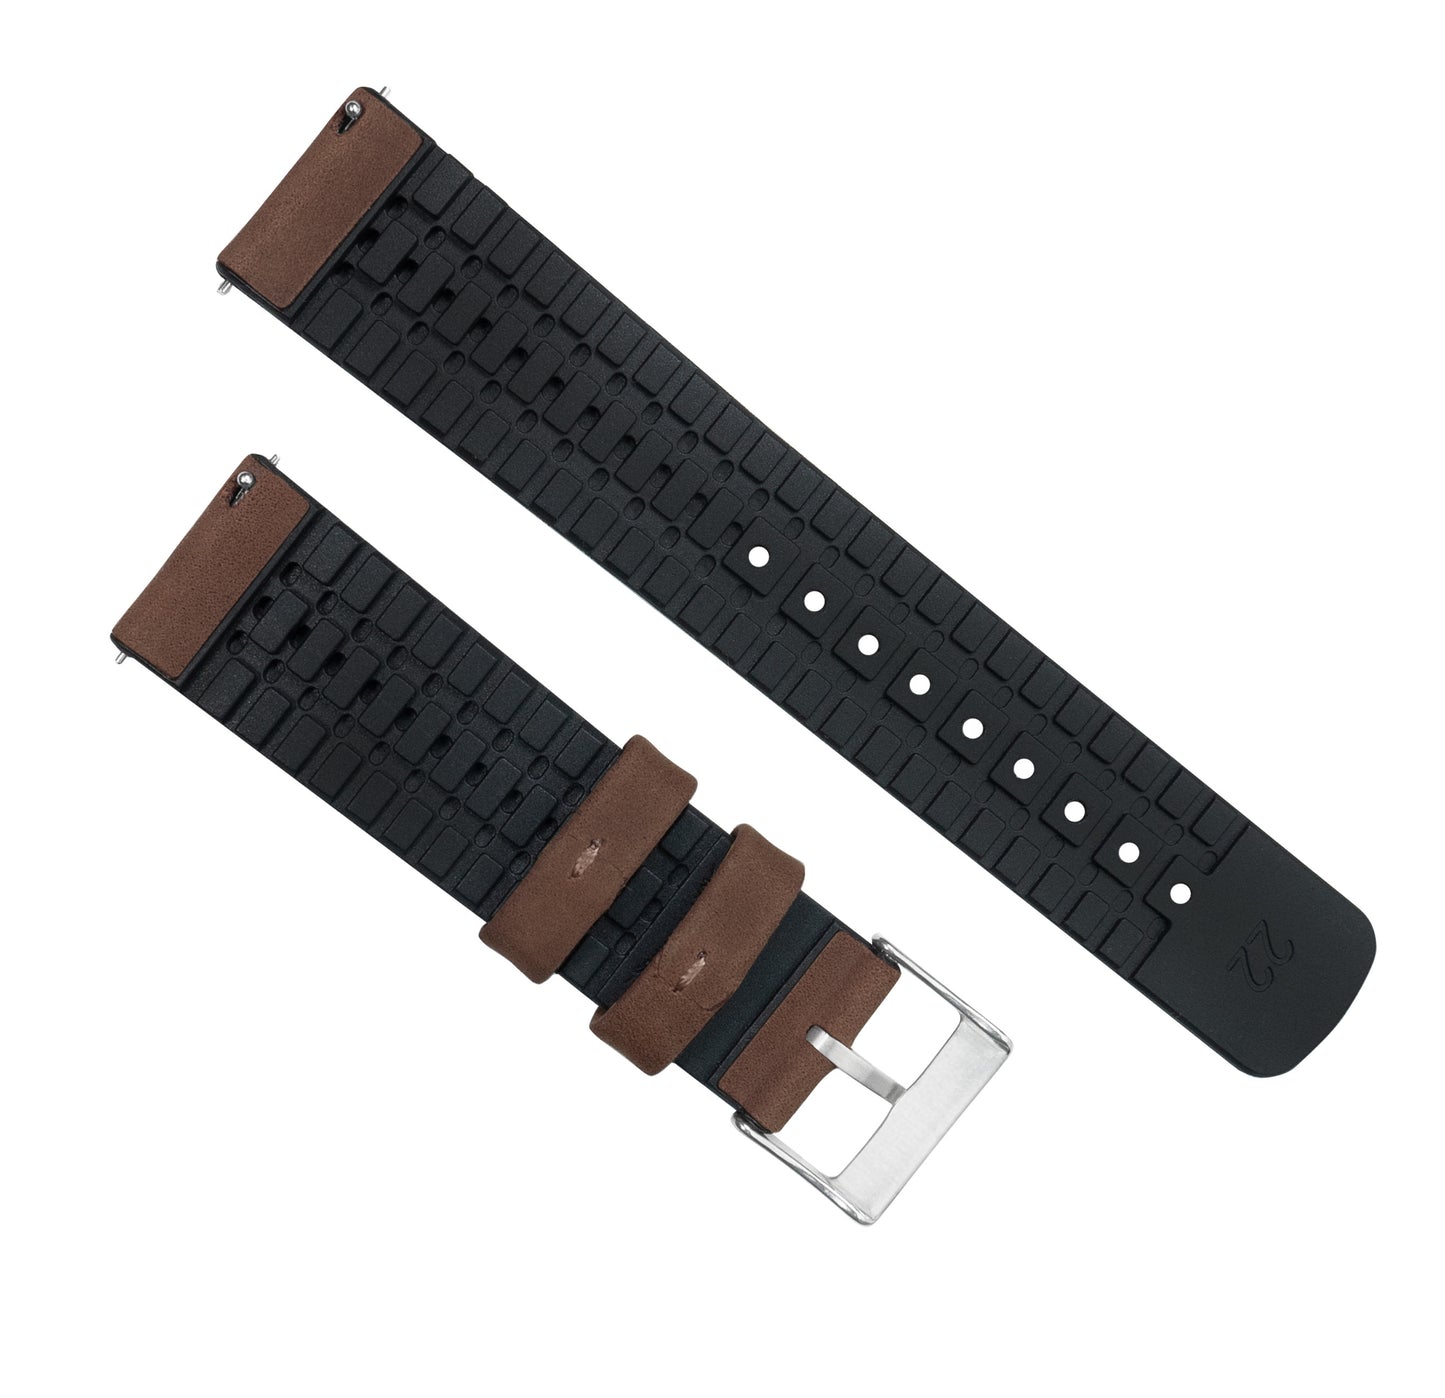 Samsung Galaxy Watch3 | Leather and Rubber Hybrid | Walnut Brown - Barton Watch Bands